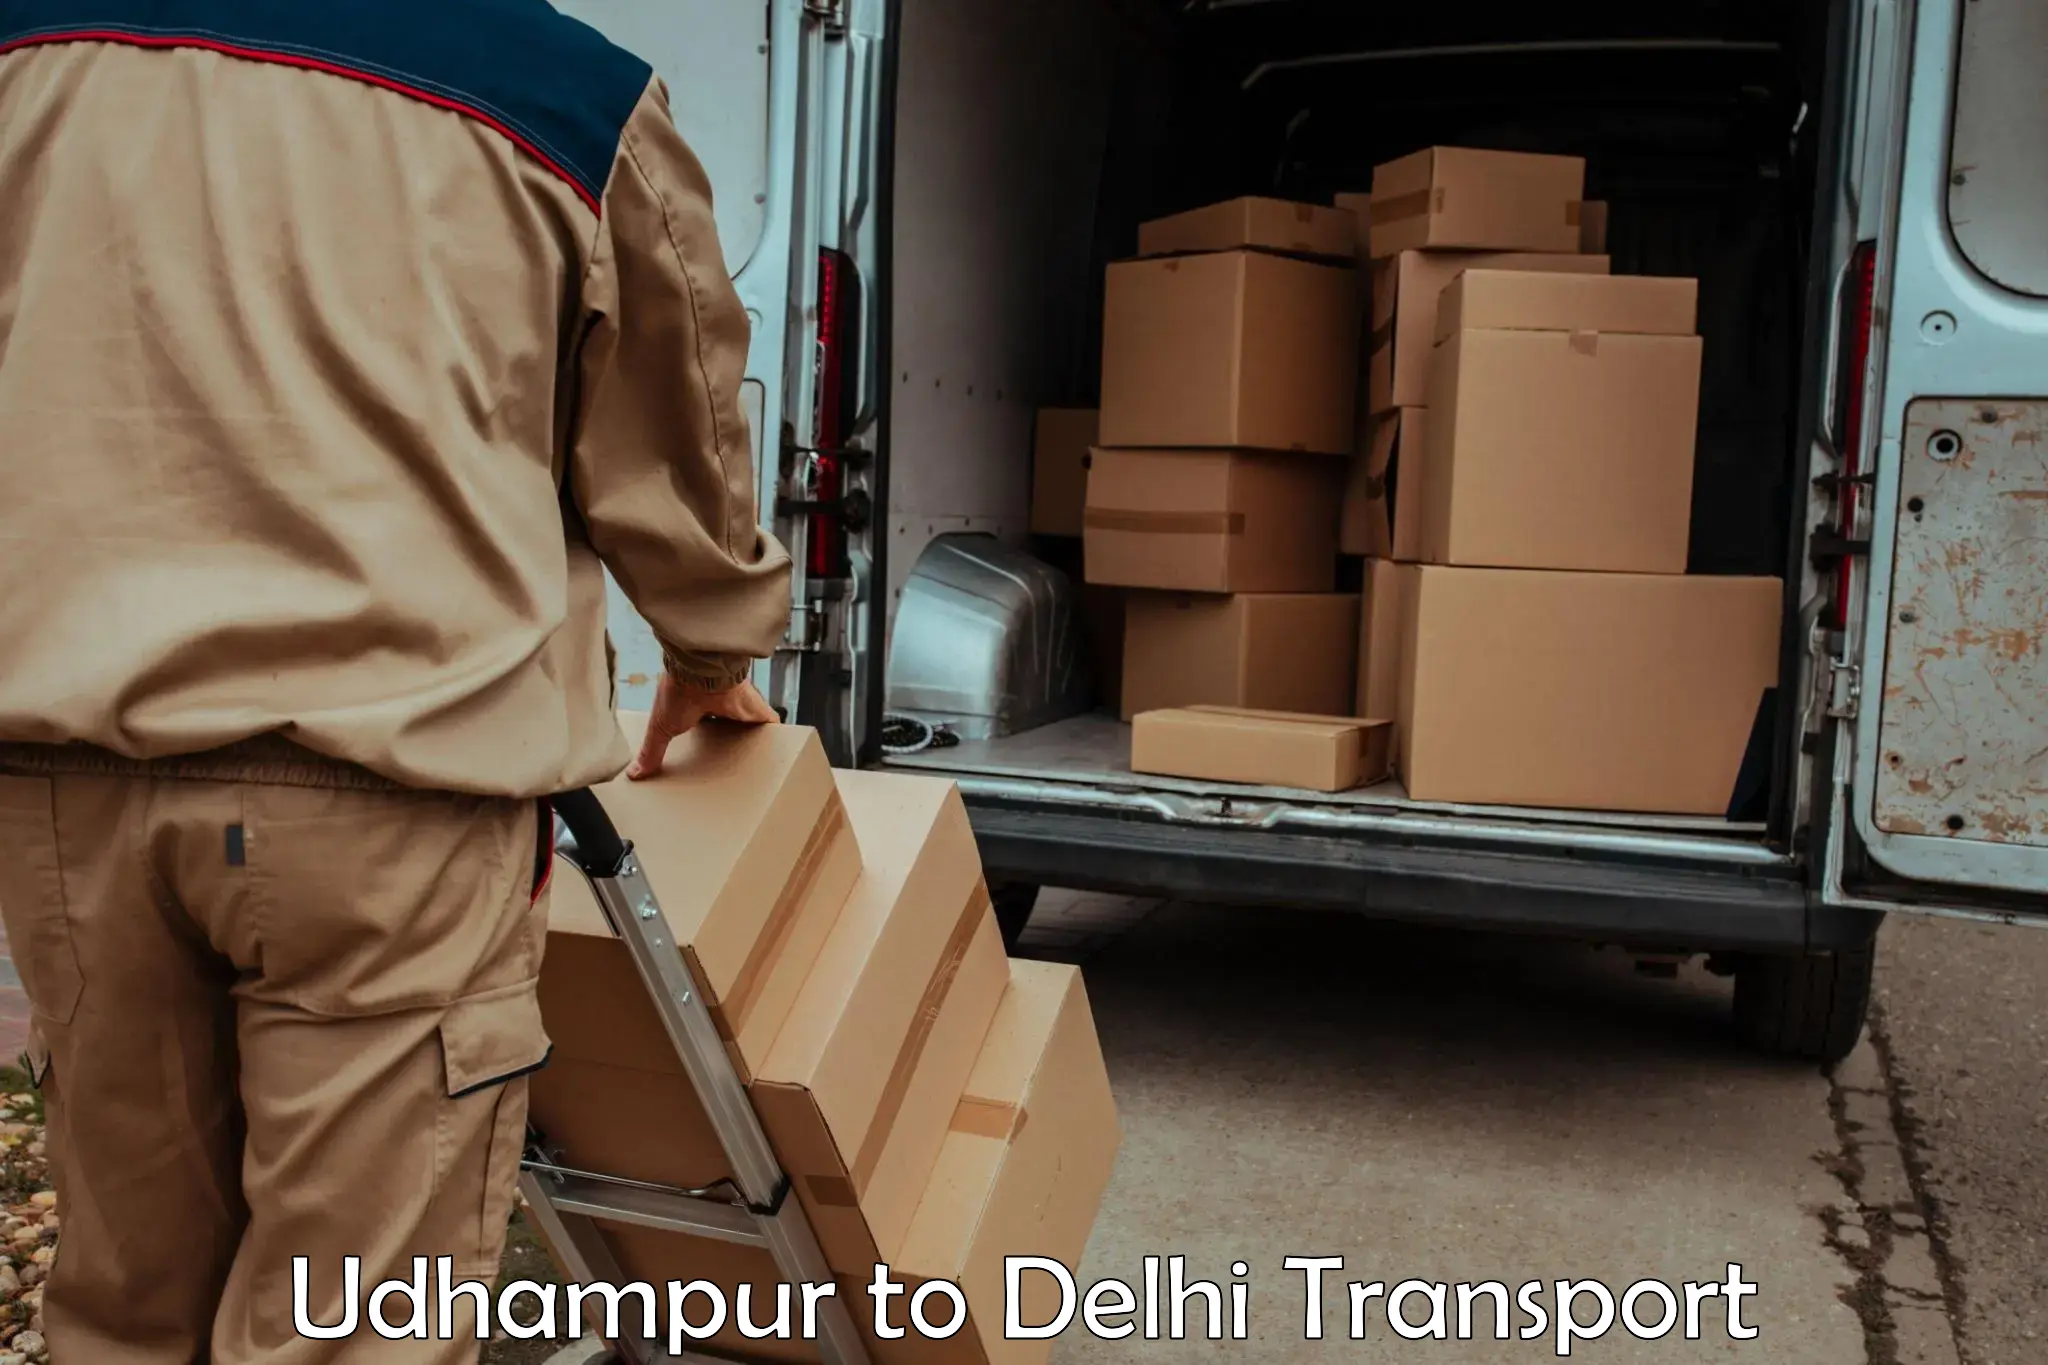 Shipping partner Udhampur to East Delhi